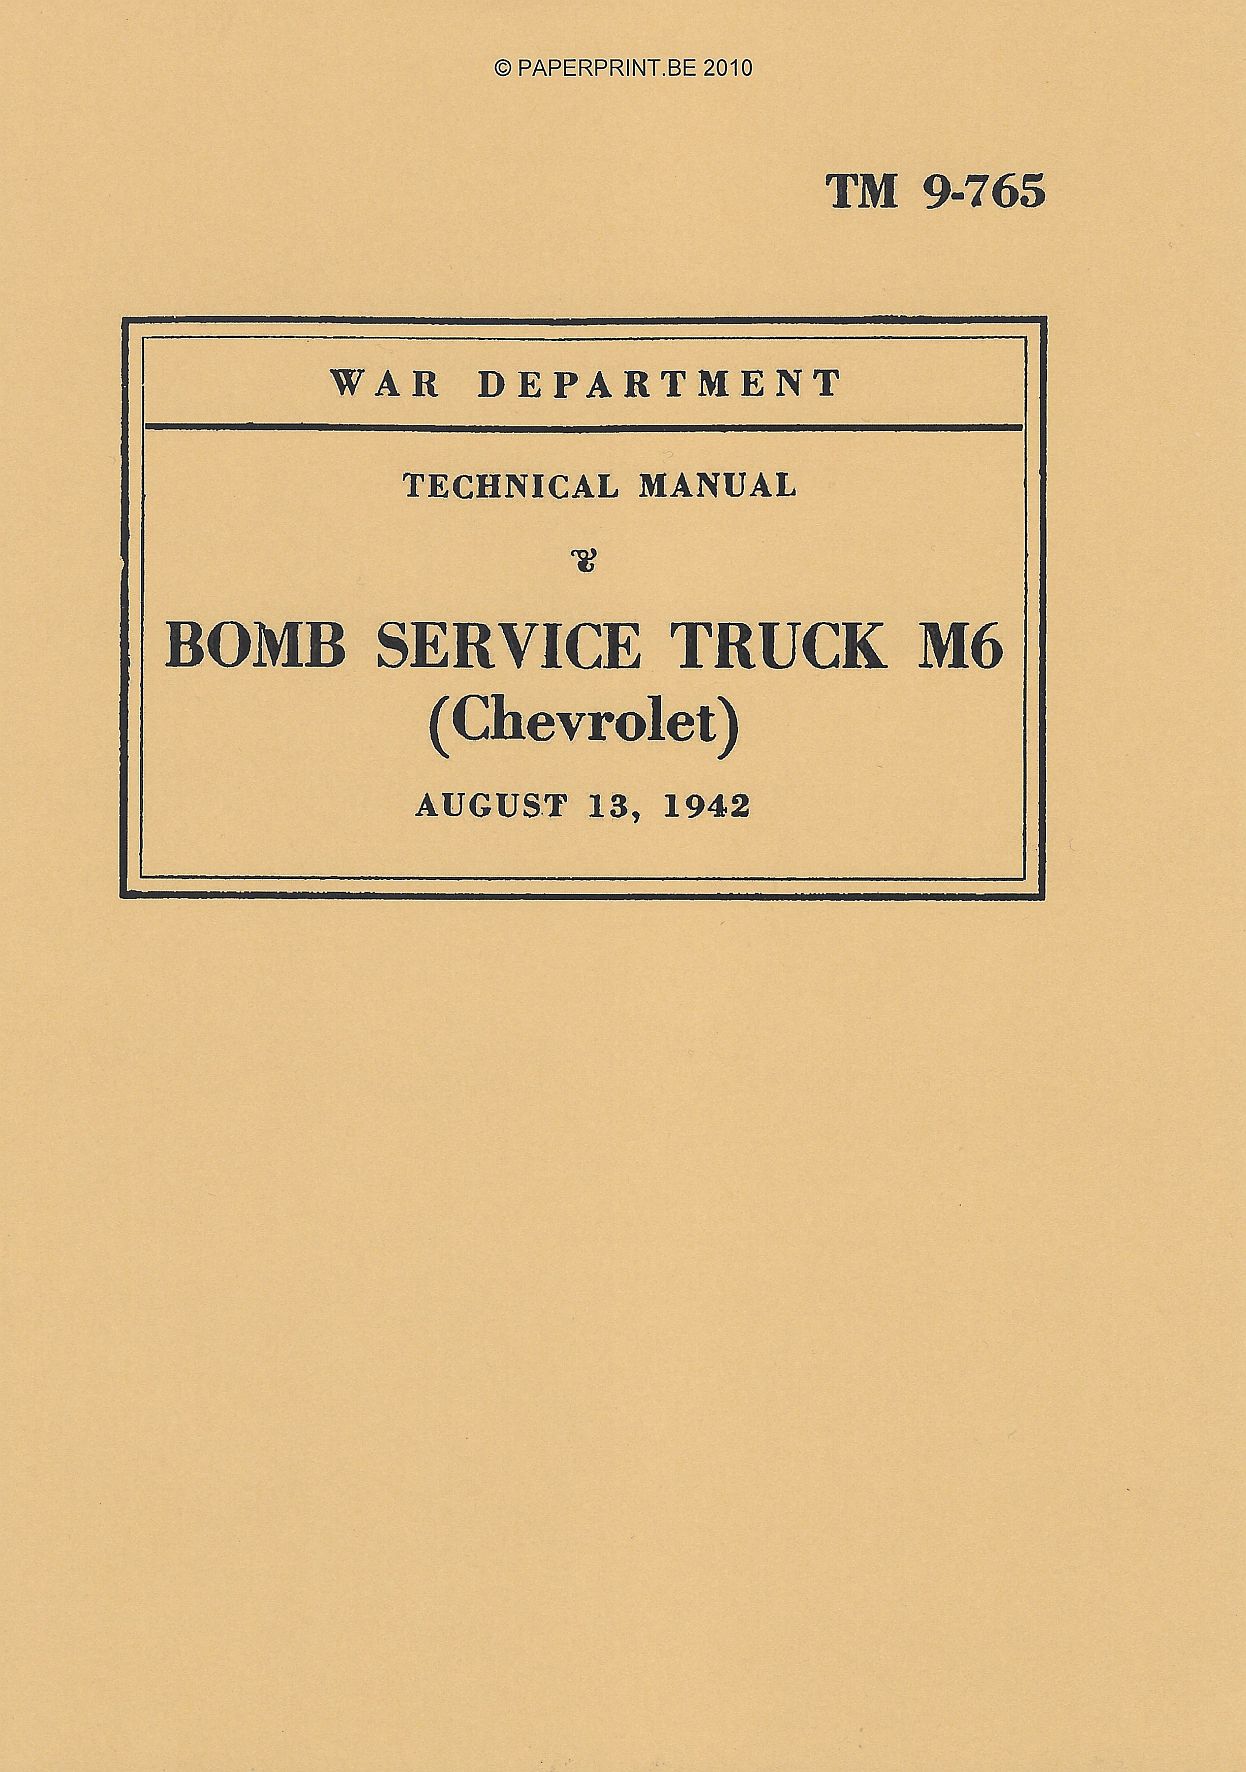 TM 9-765 US BOMB SERVICE TRUCK M6 (CHEVROLET)